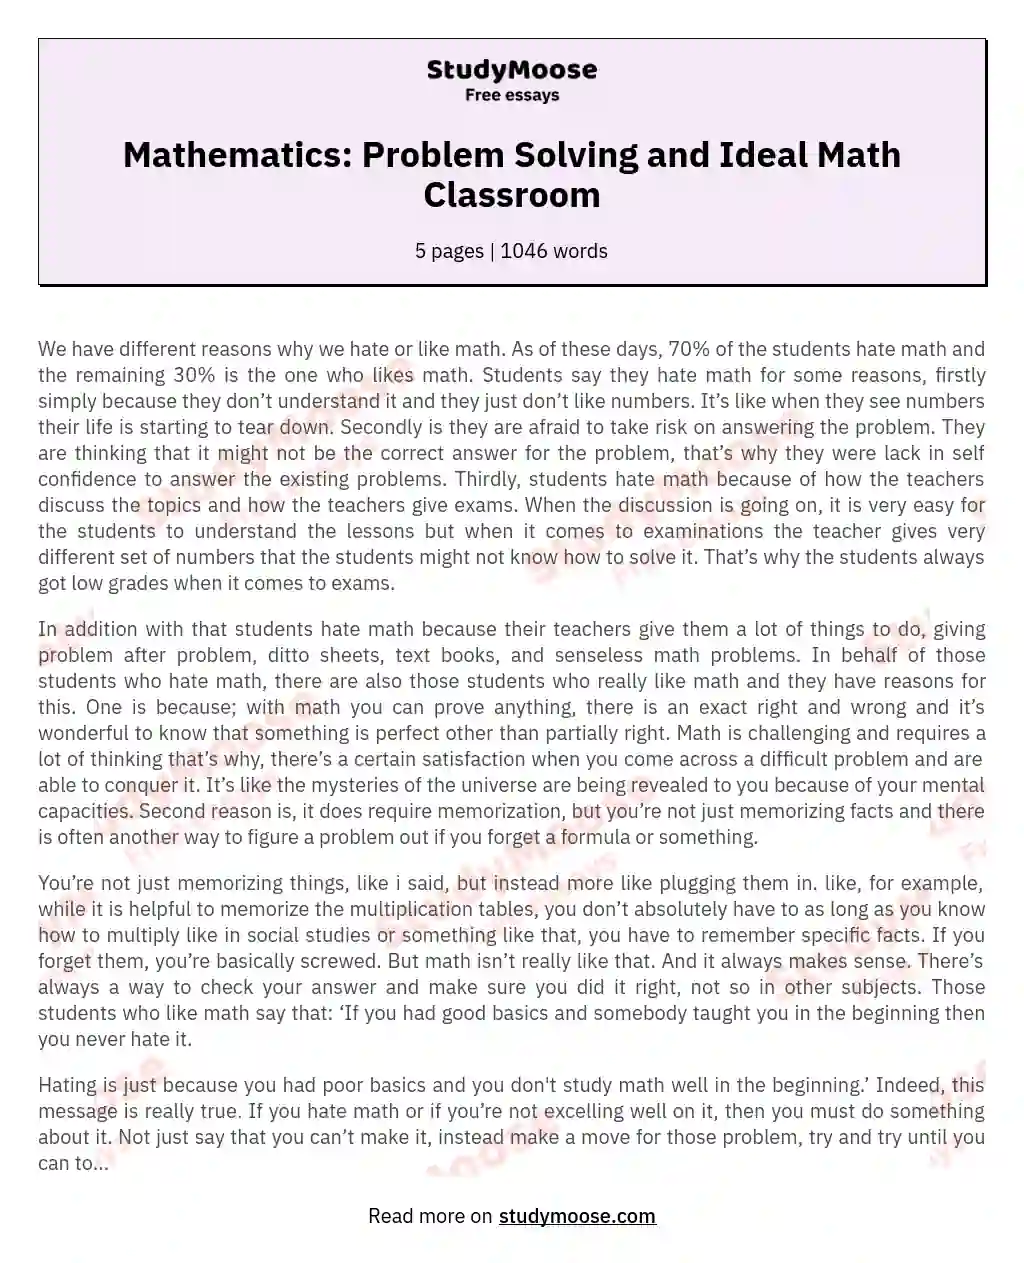 Mathematics: Problem Solving and Ideal Math Classroom